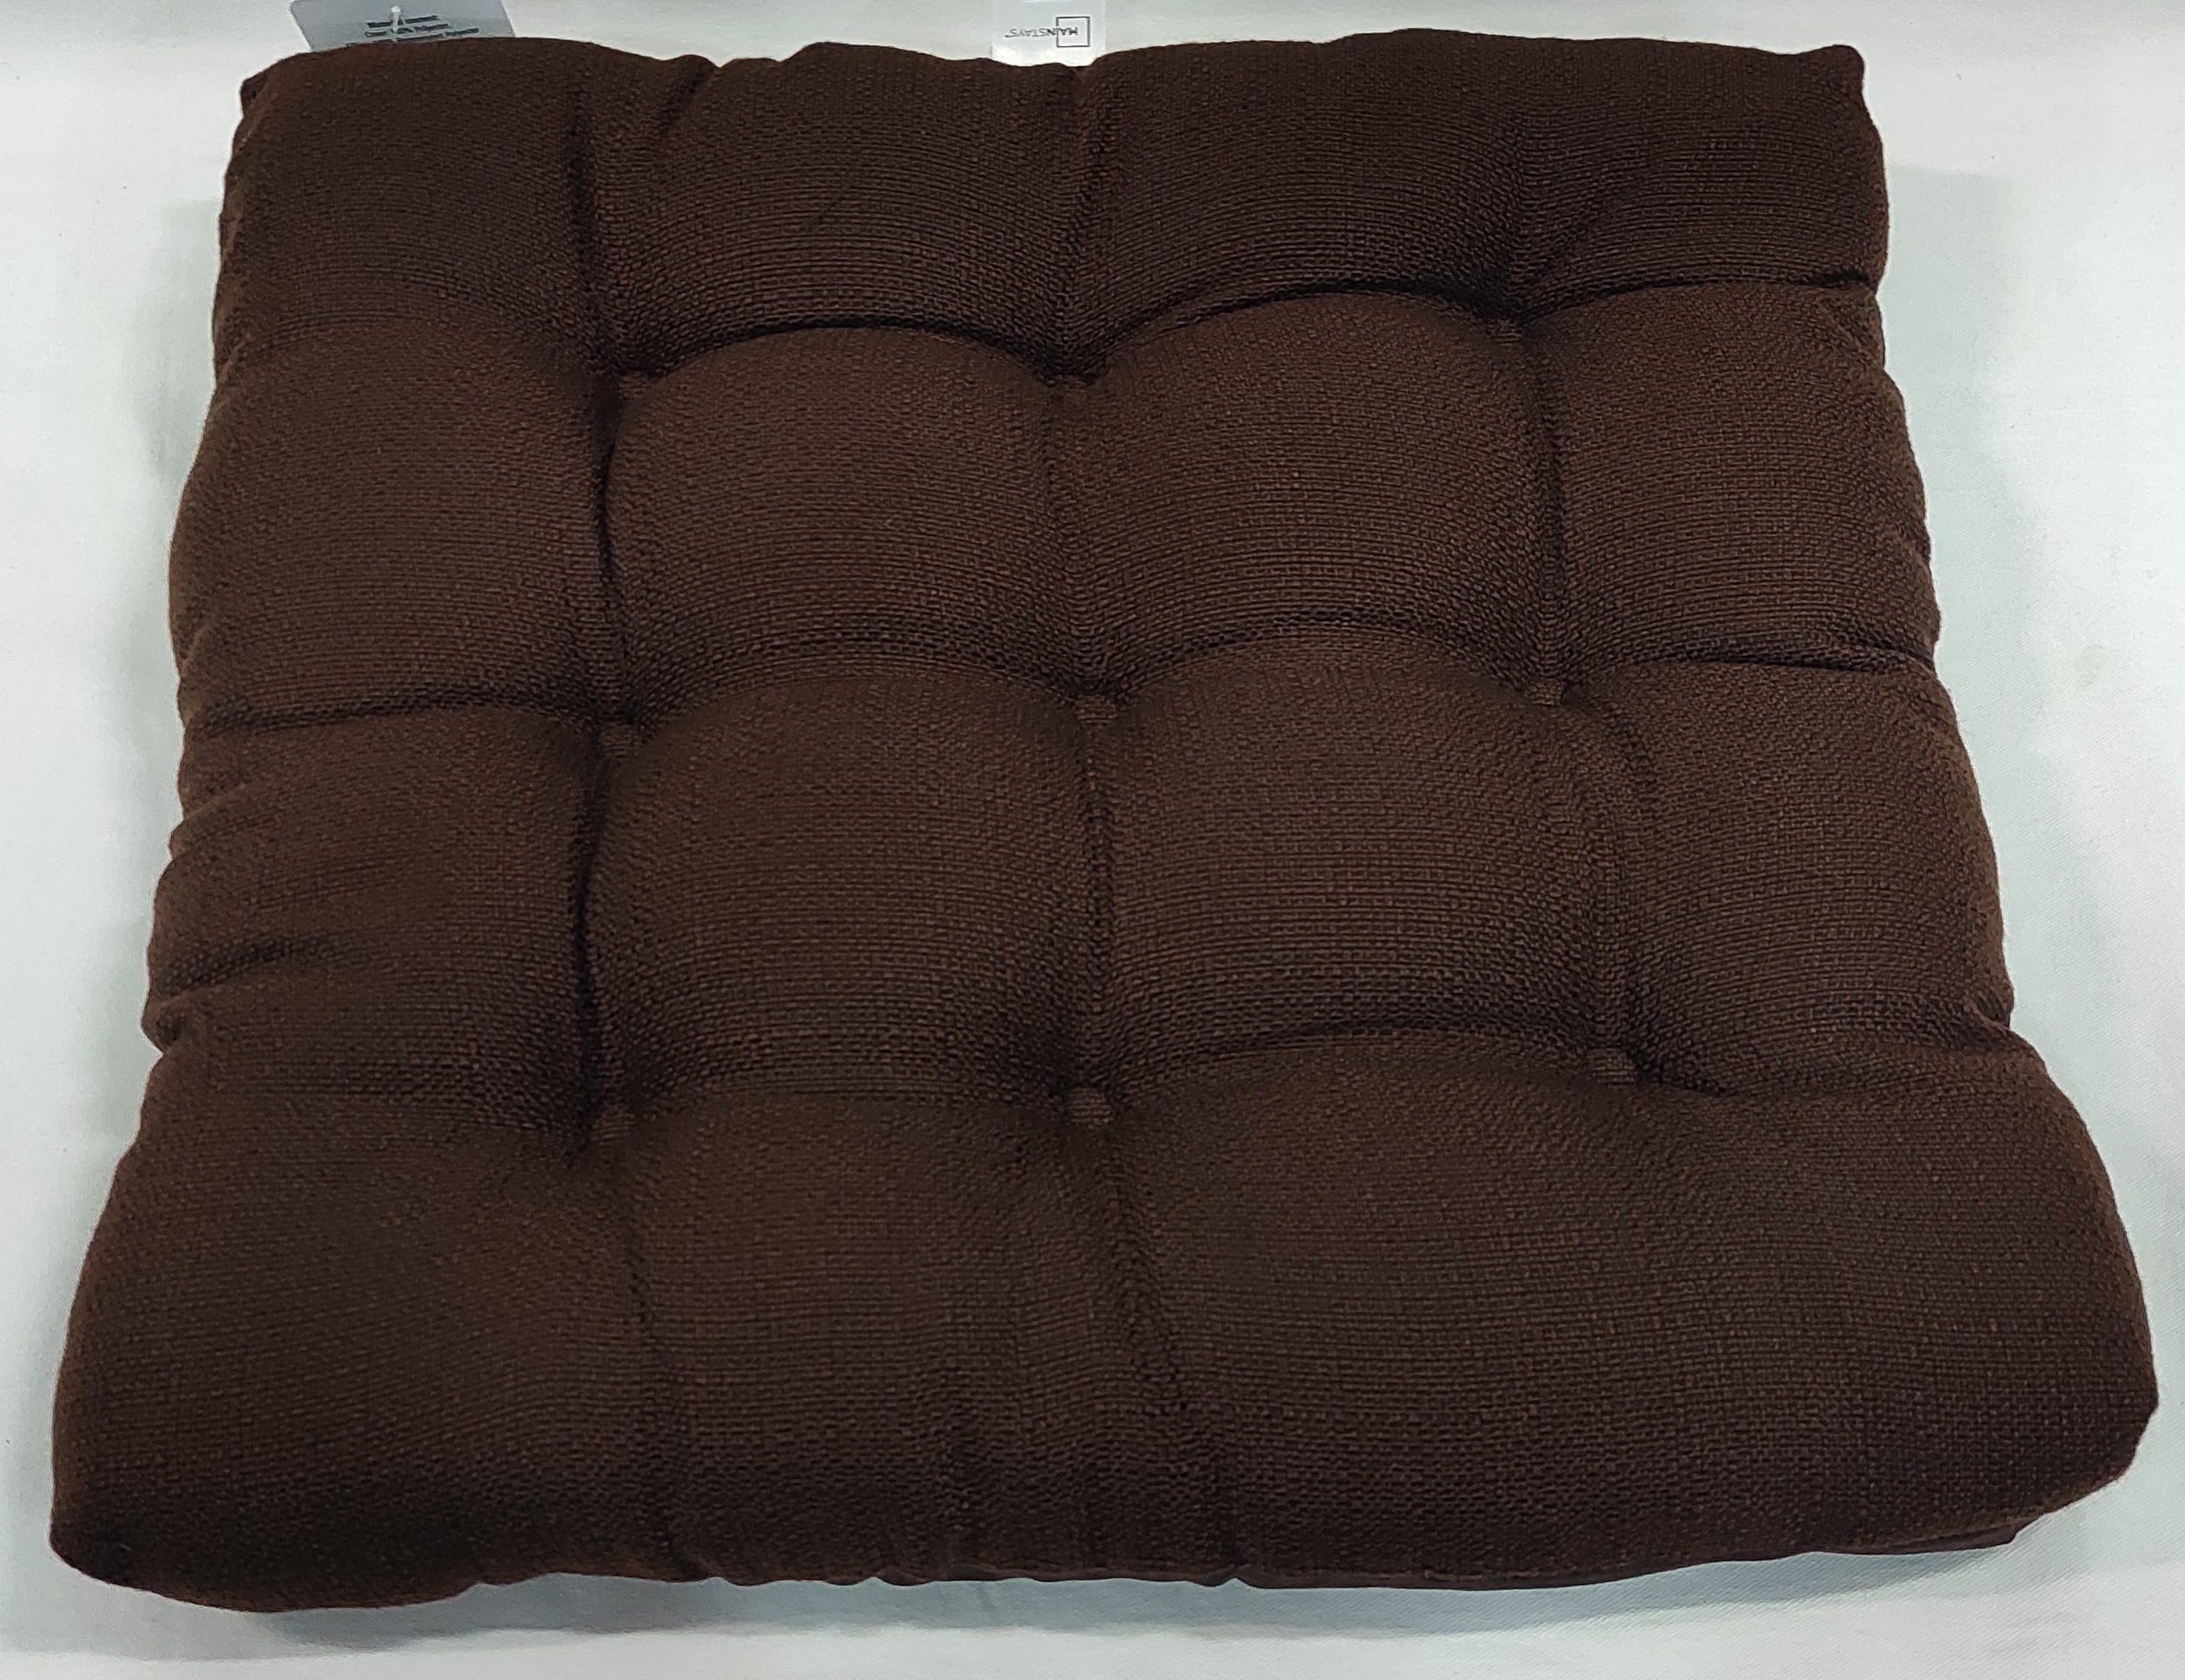 Mainstays Textured Chair Cushion, Brown, 1-Piece